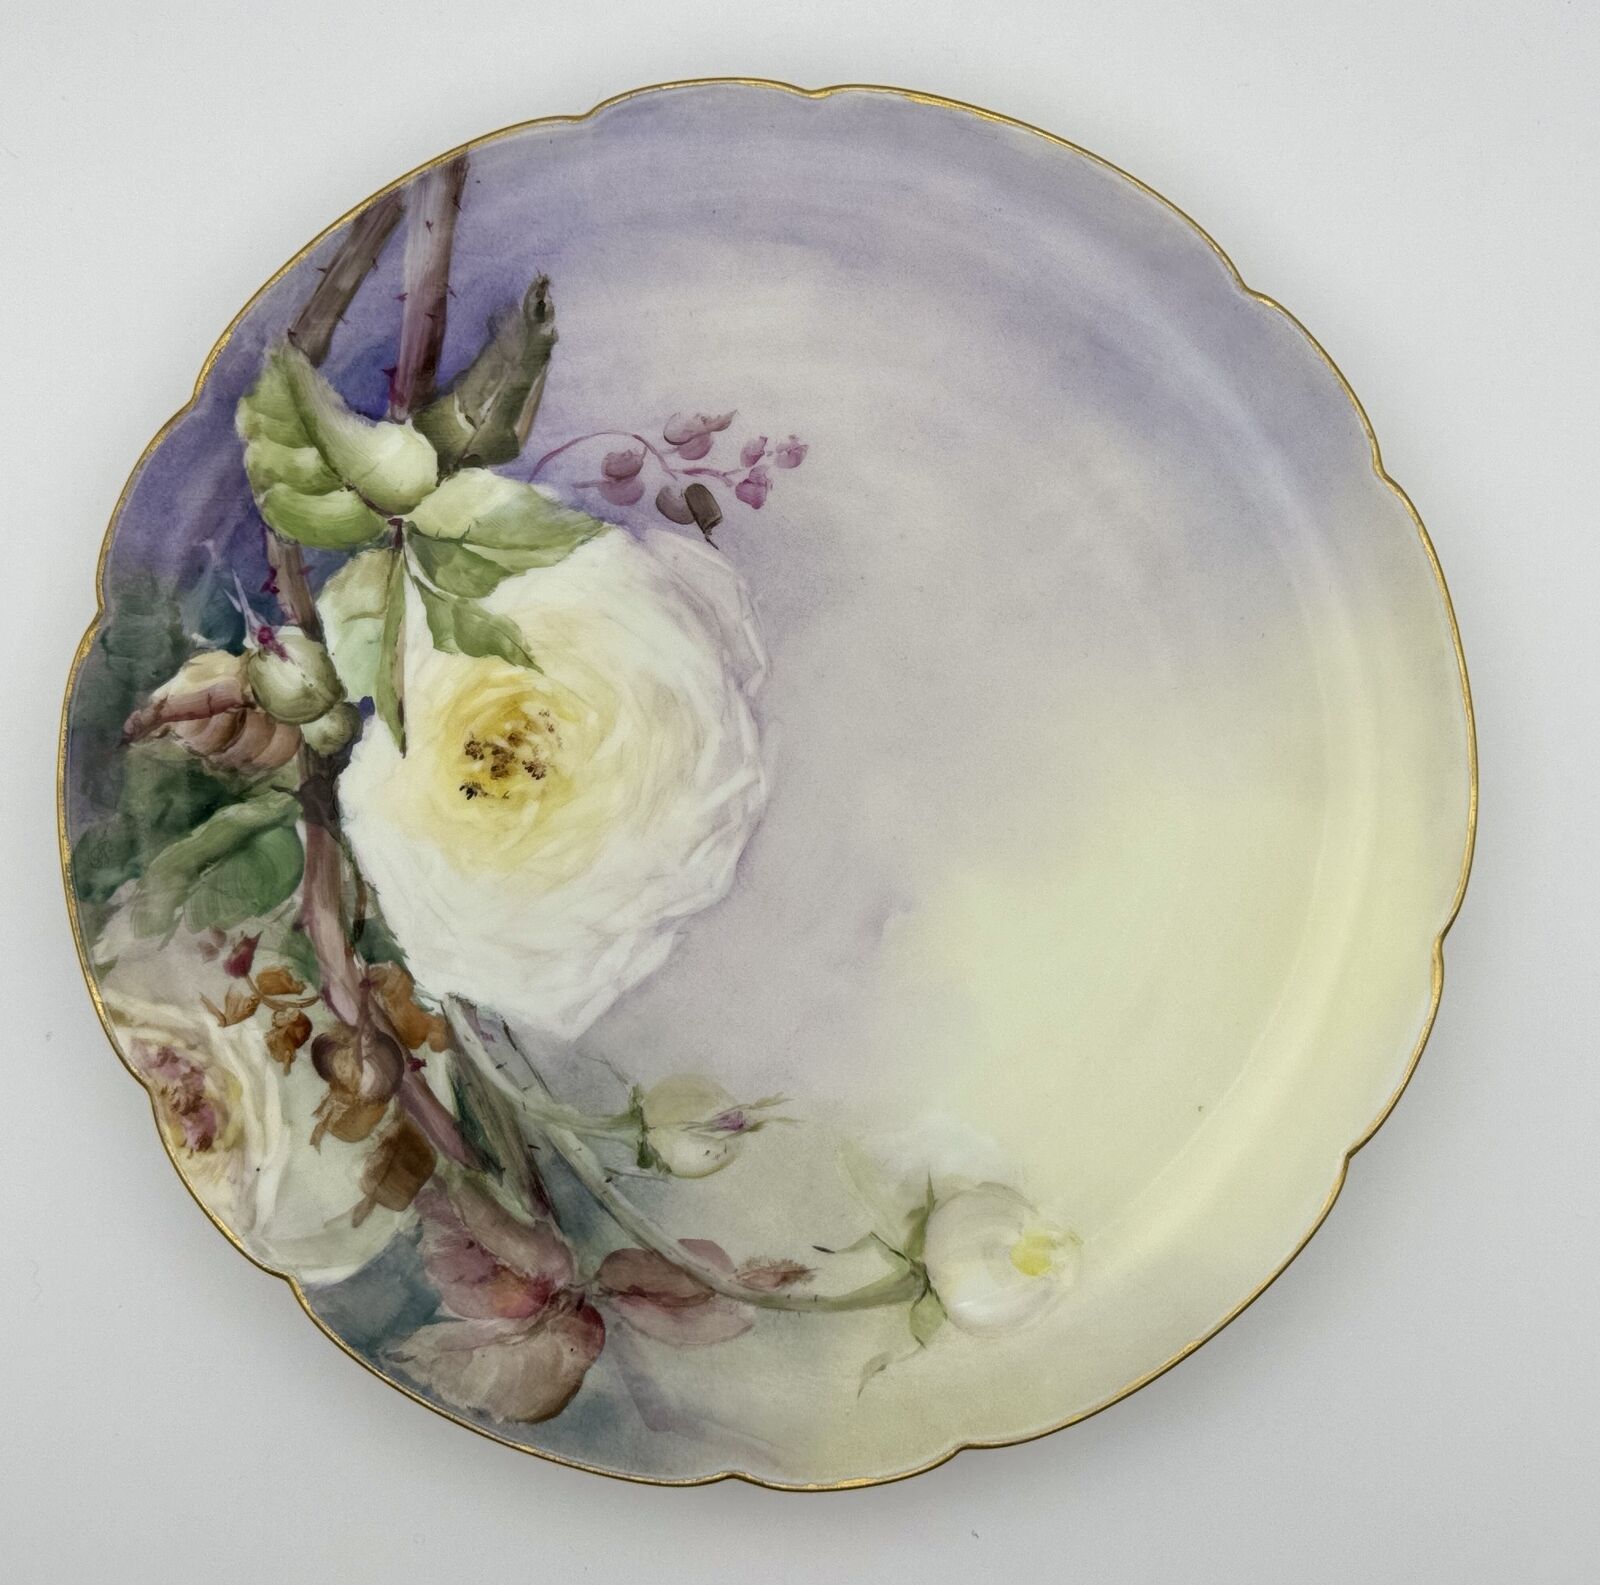 Rare  Haviland France Hand-Painted Porcelain Plate with Floral Design & Gold Rim